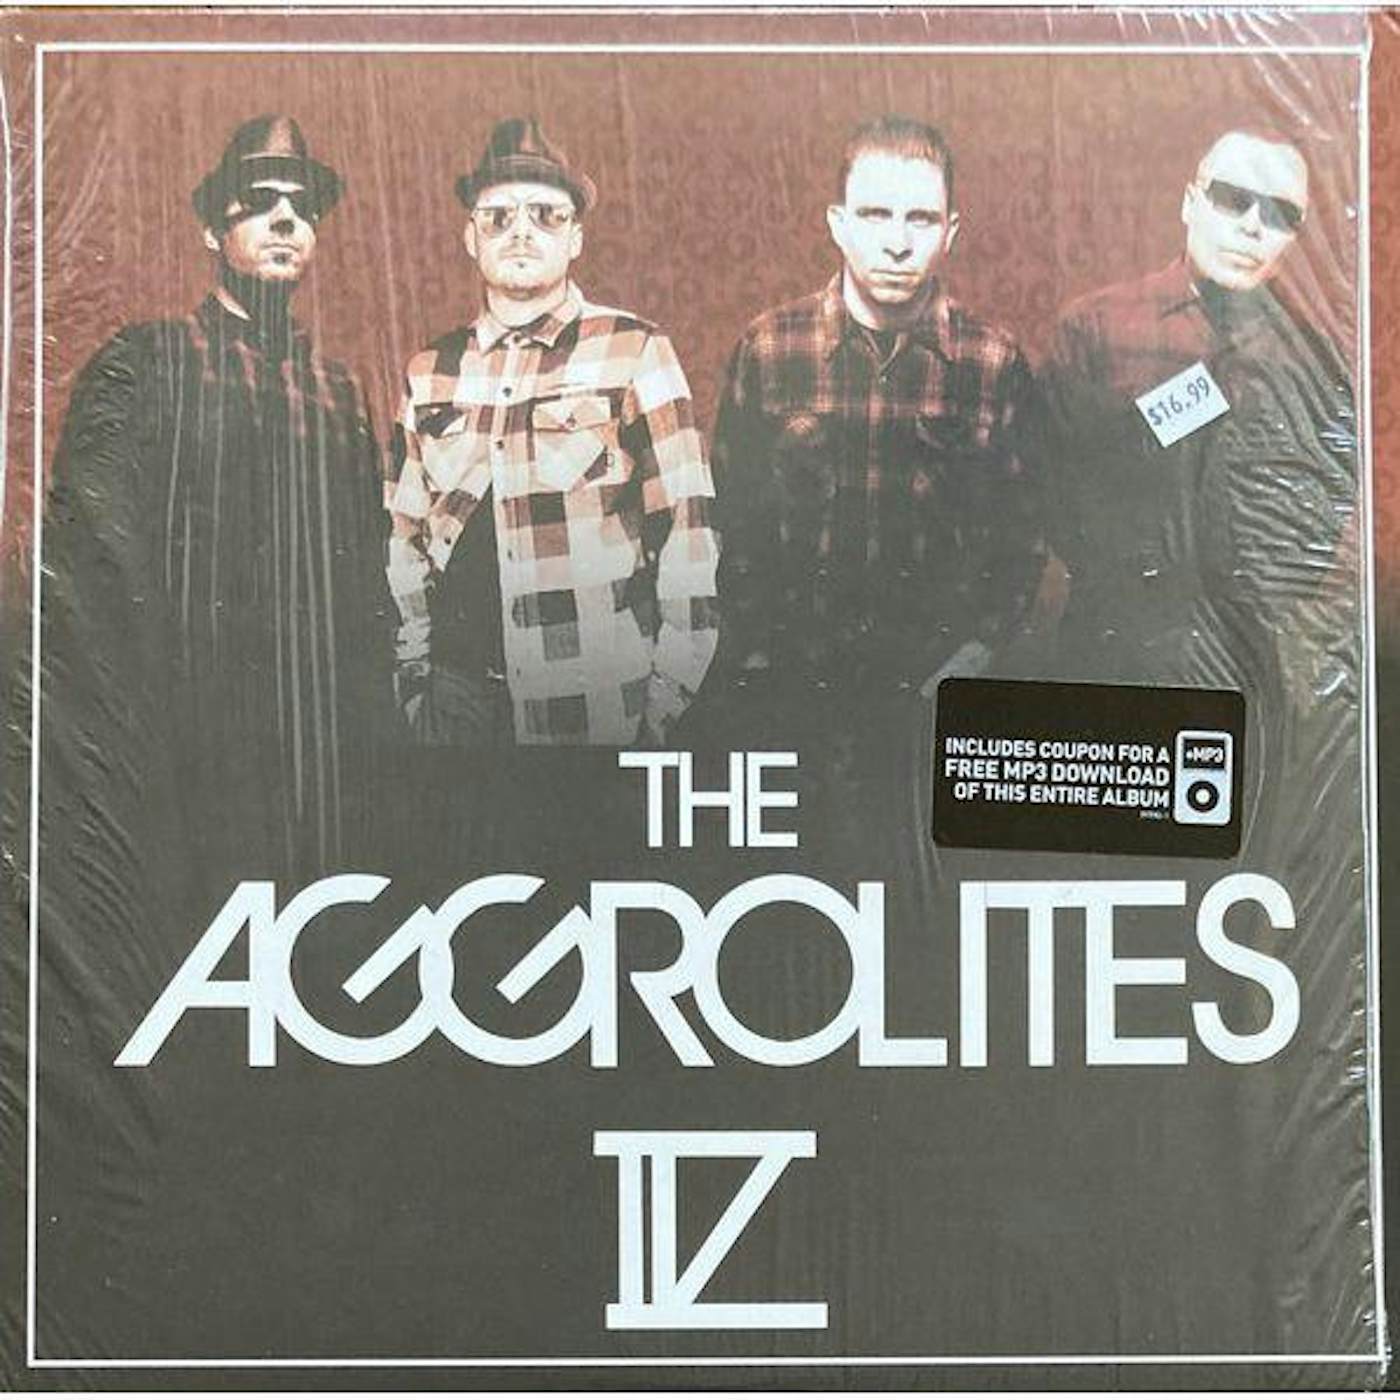 The Aggrolites IV Vinyl Record